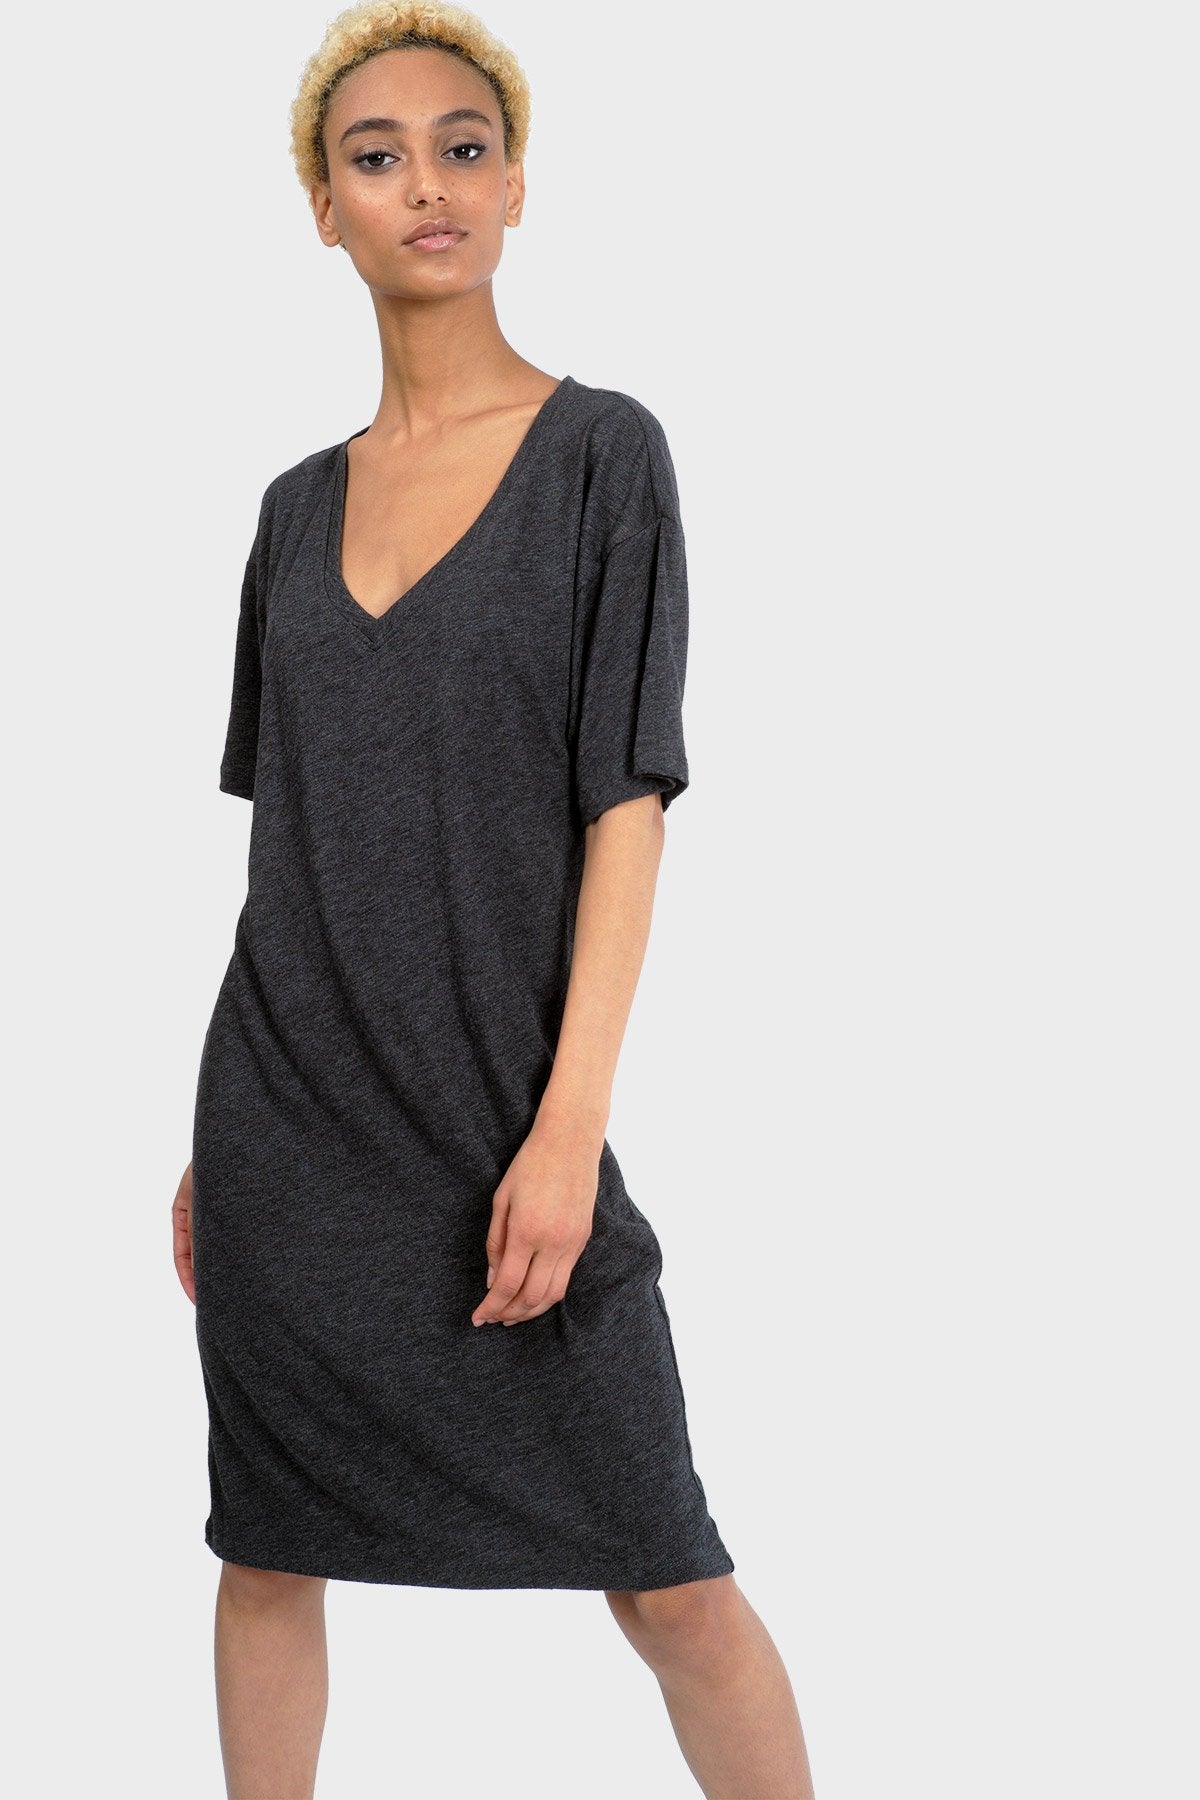 MIKA T-SHIRT DRESS T-Shirt Dress 337 Brand 